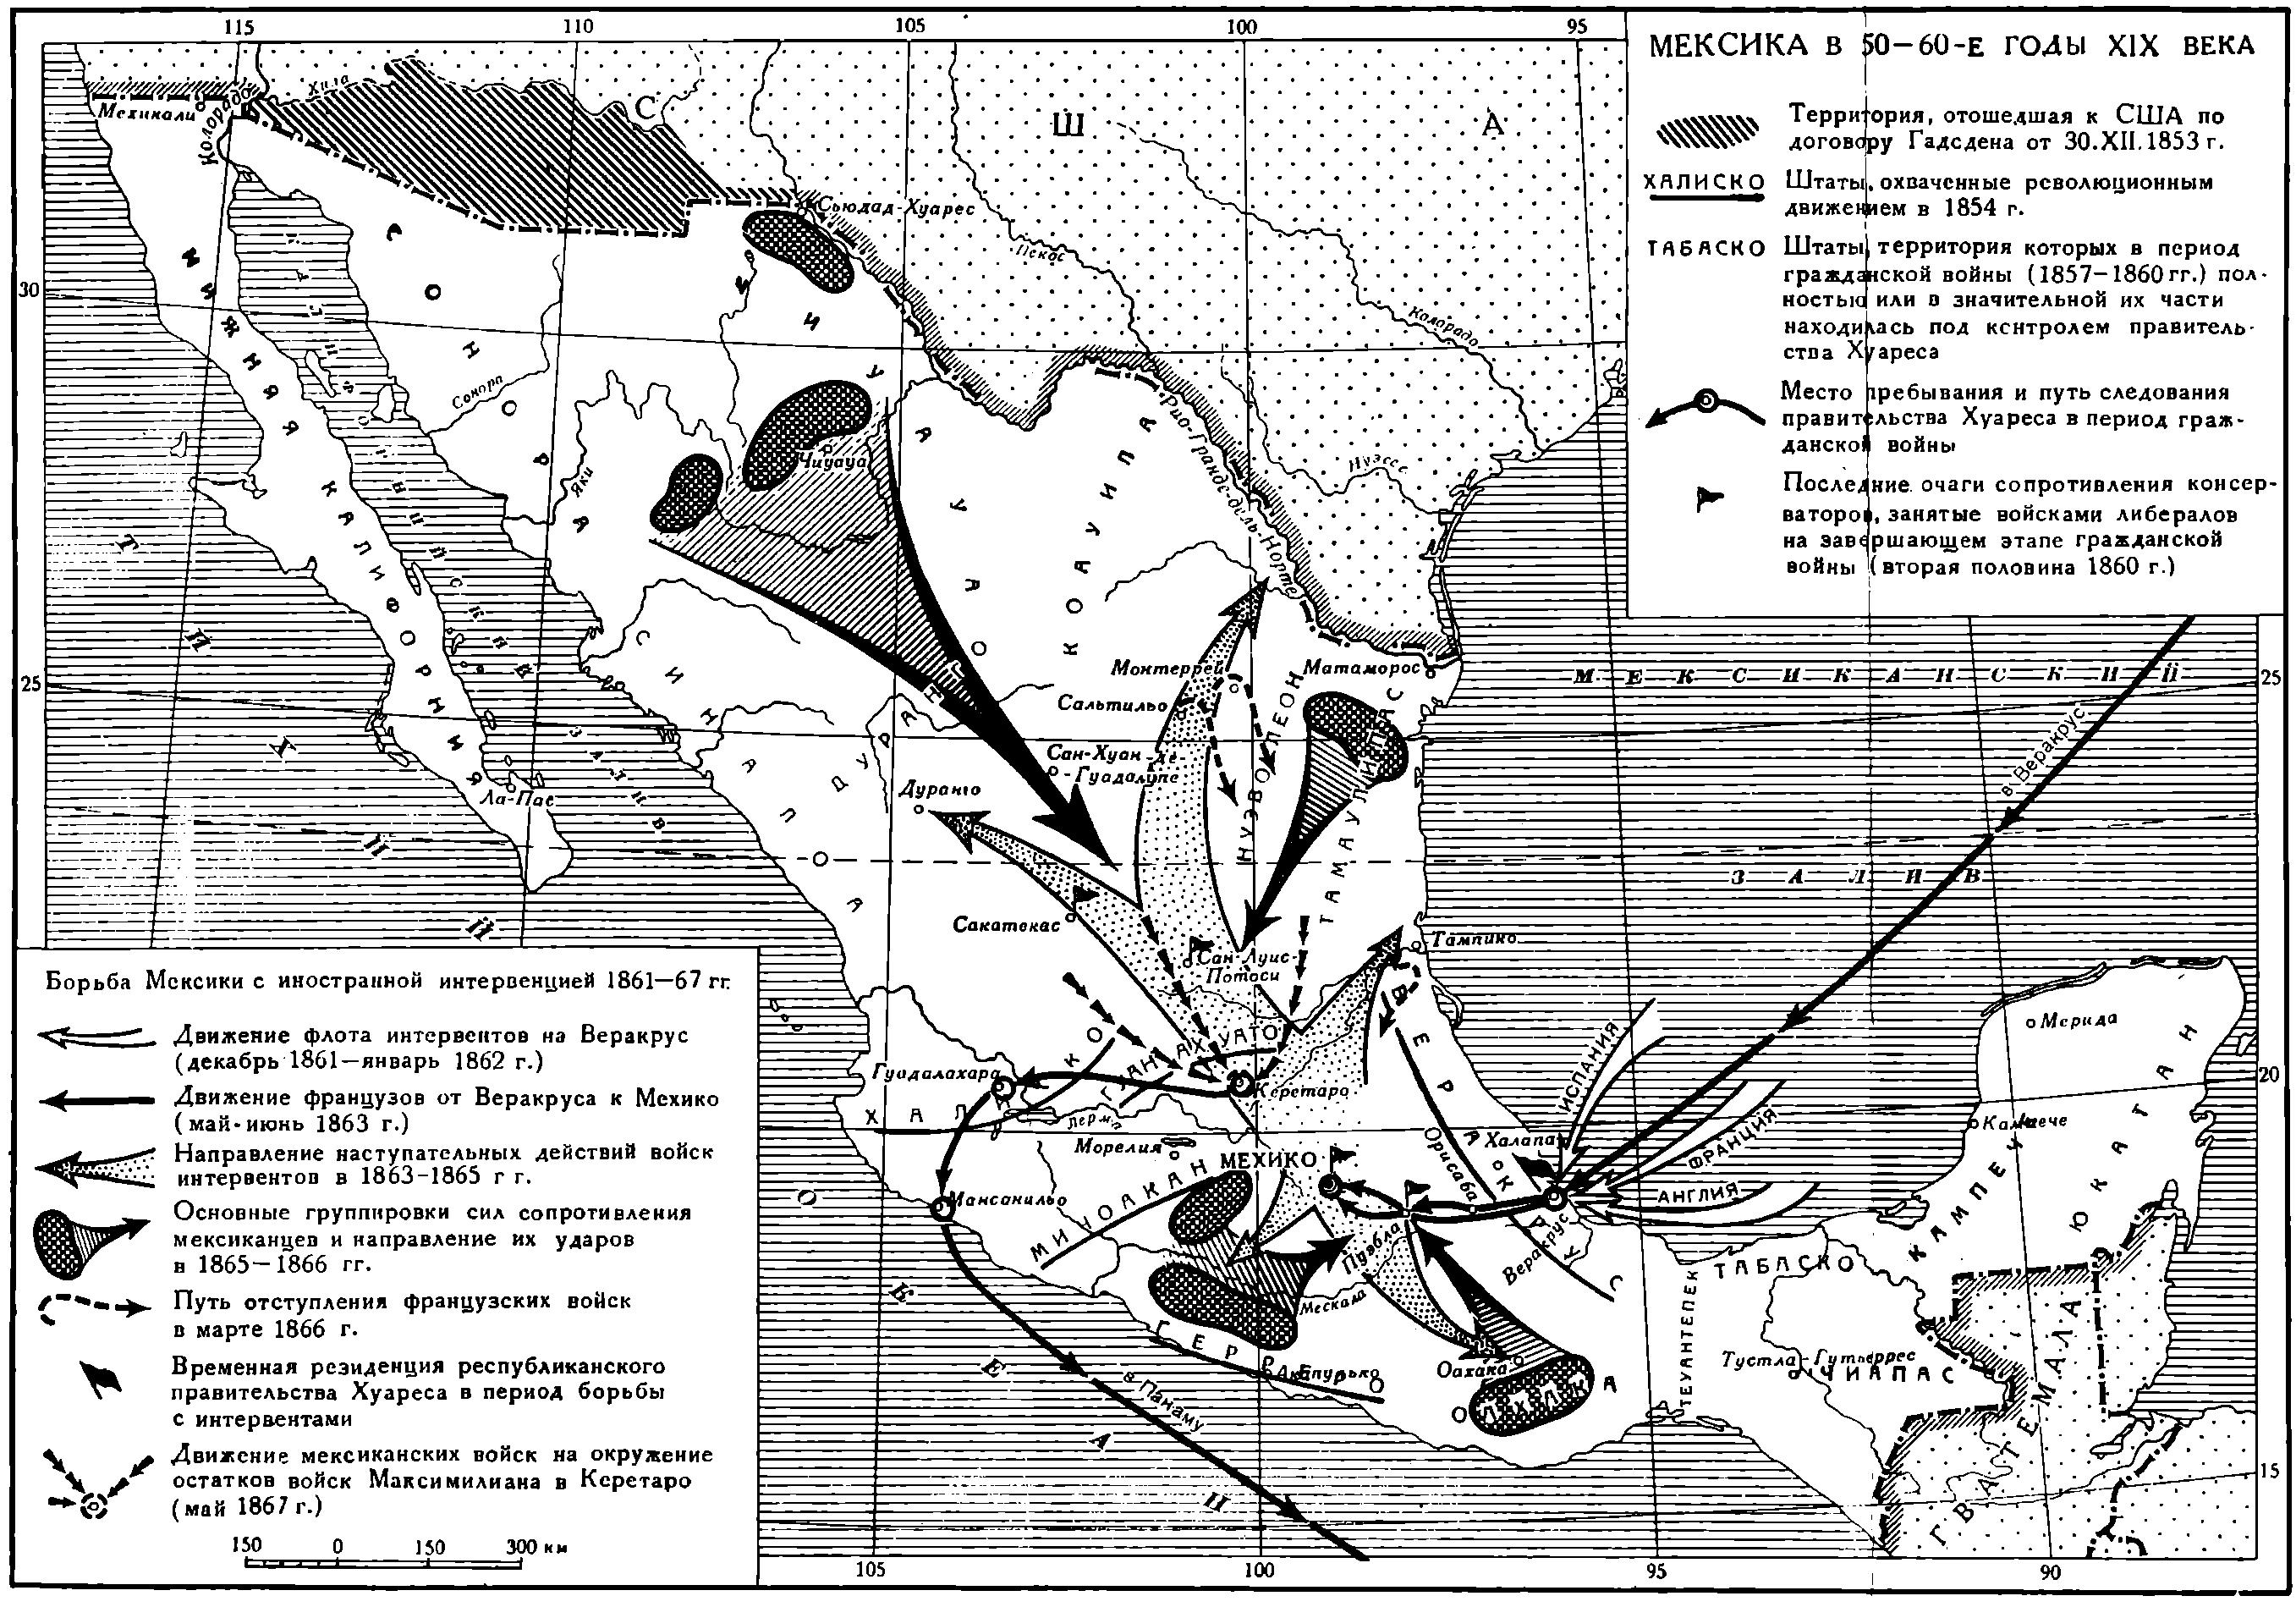 Мексика в 50-60 годы XIX века